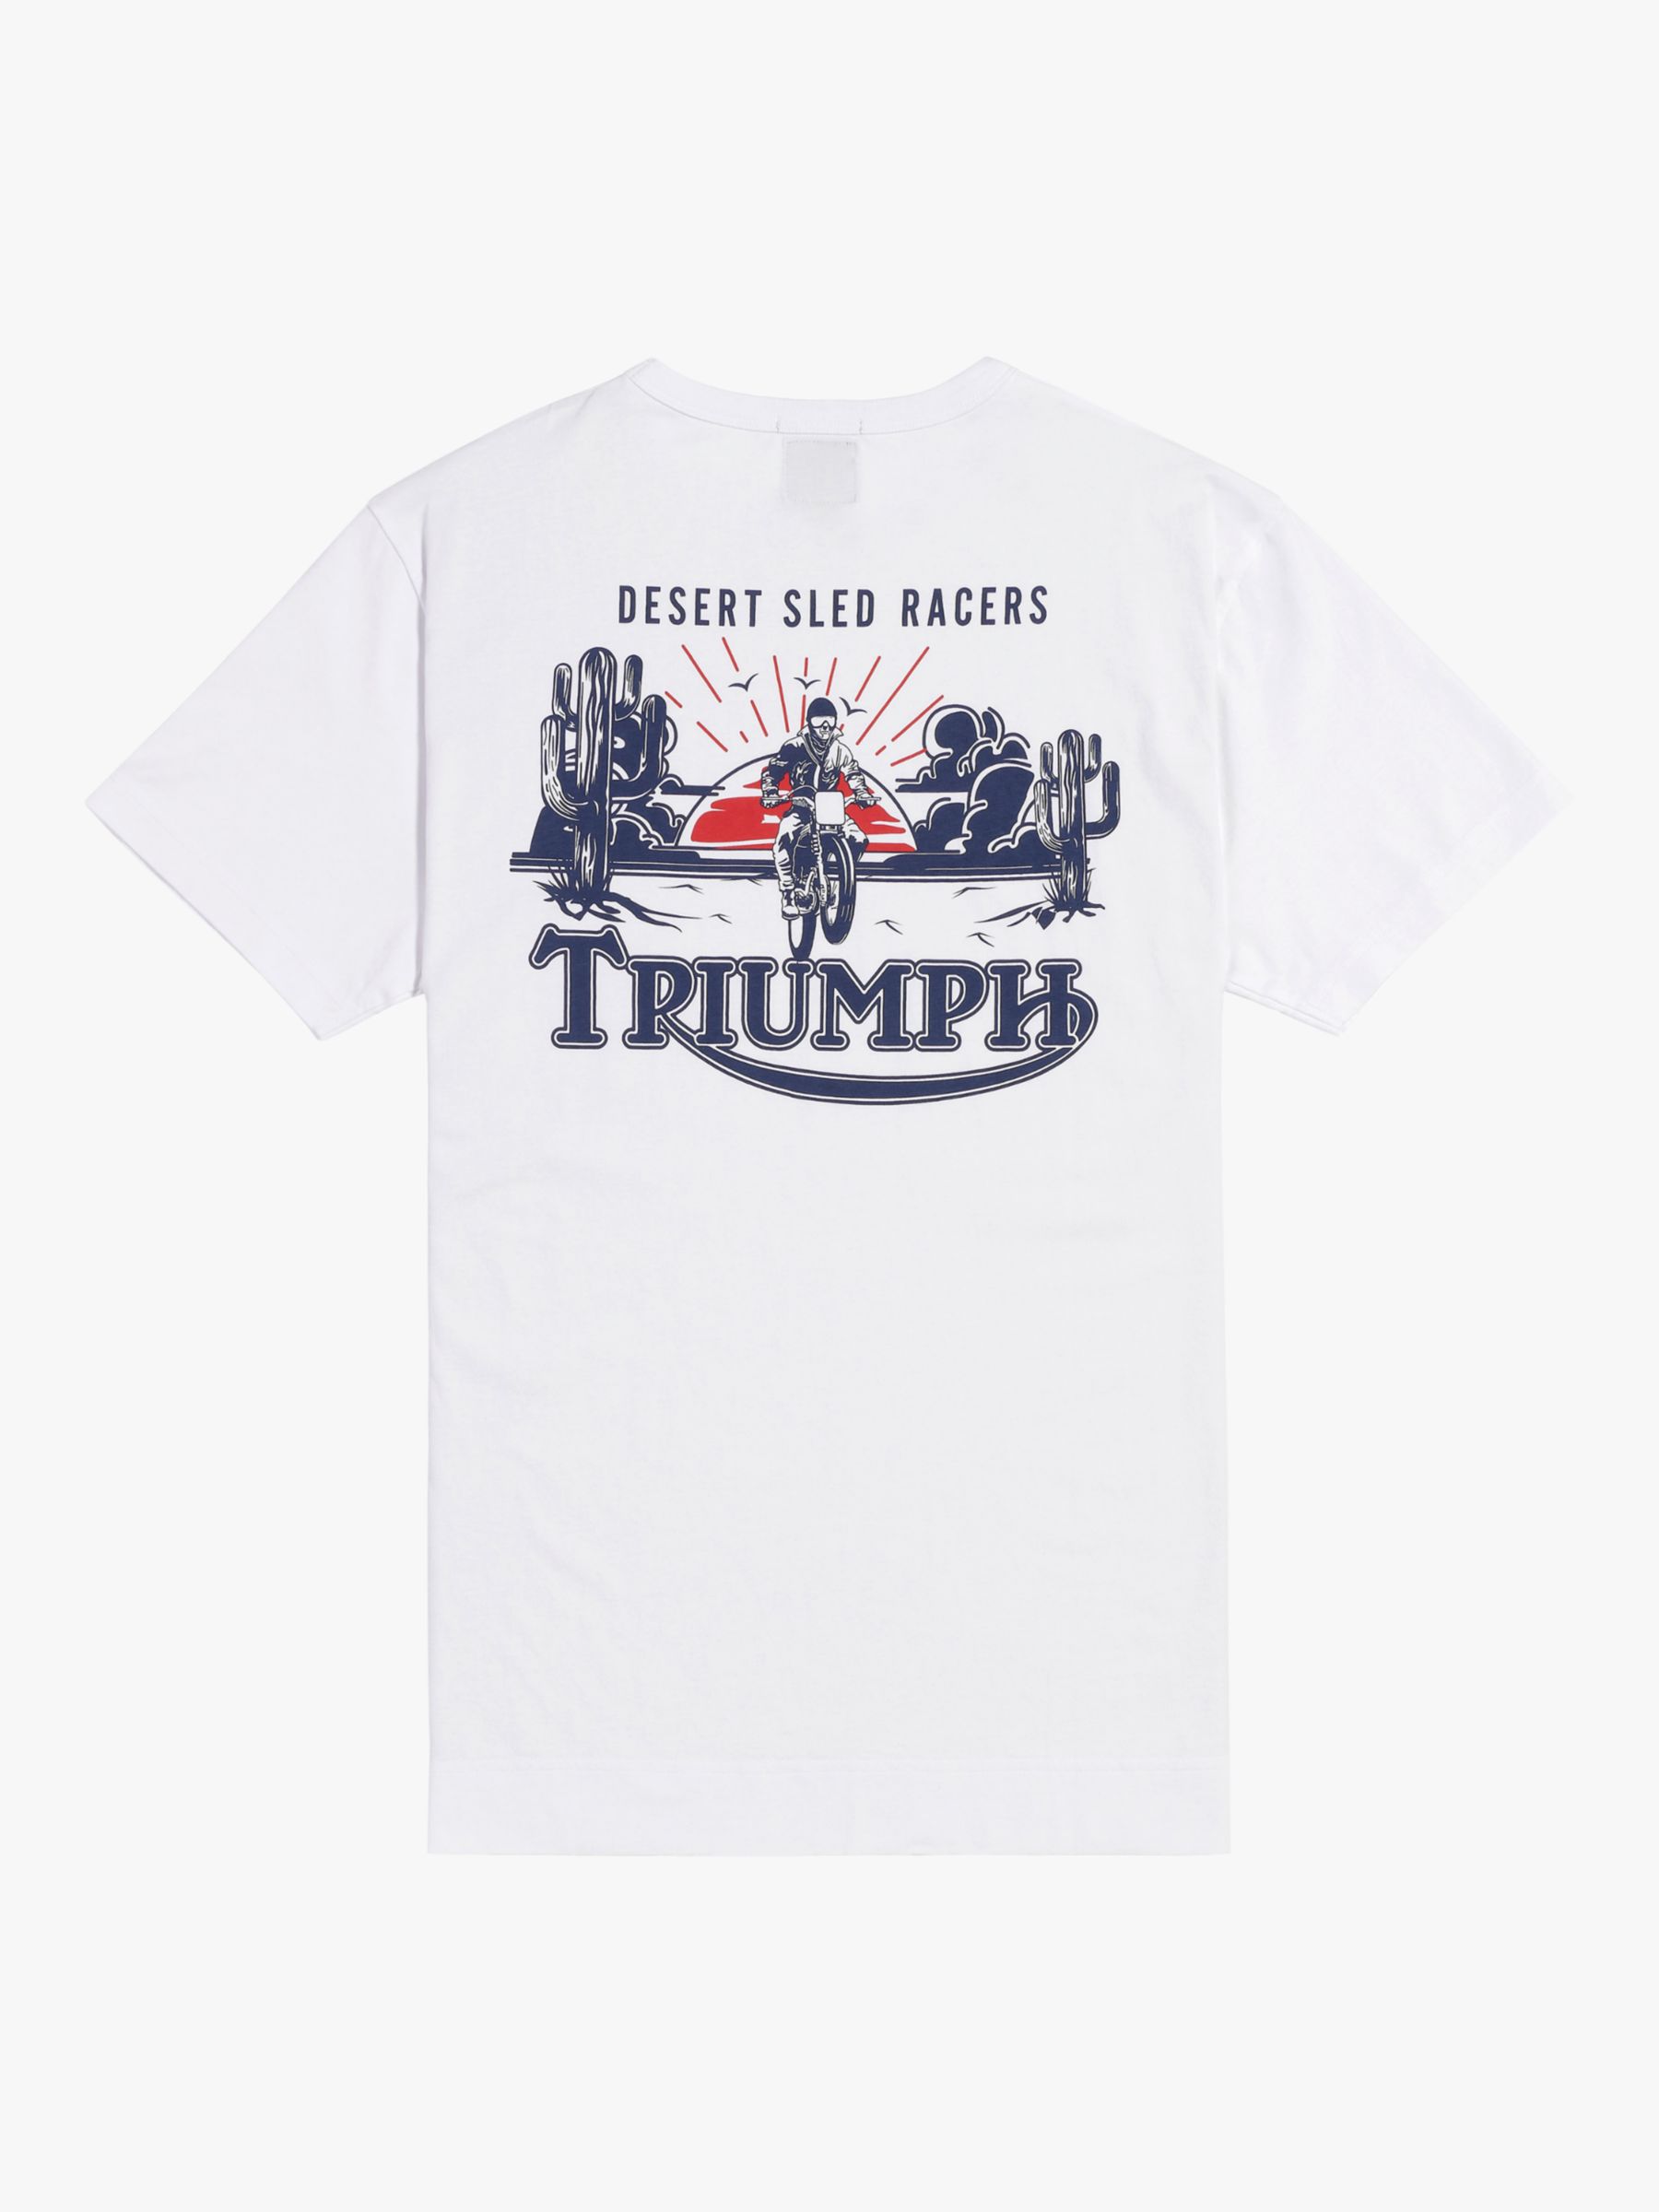 Triumph Motorcycles Sled Print T-Shirt, White, M